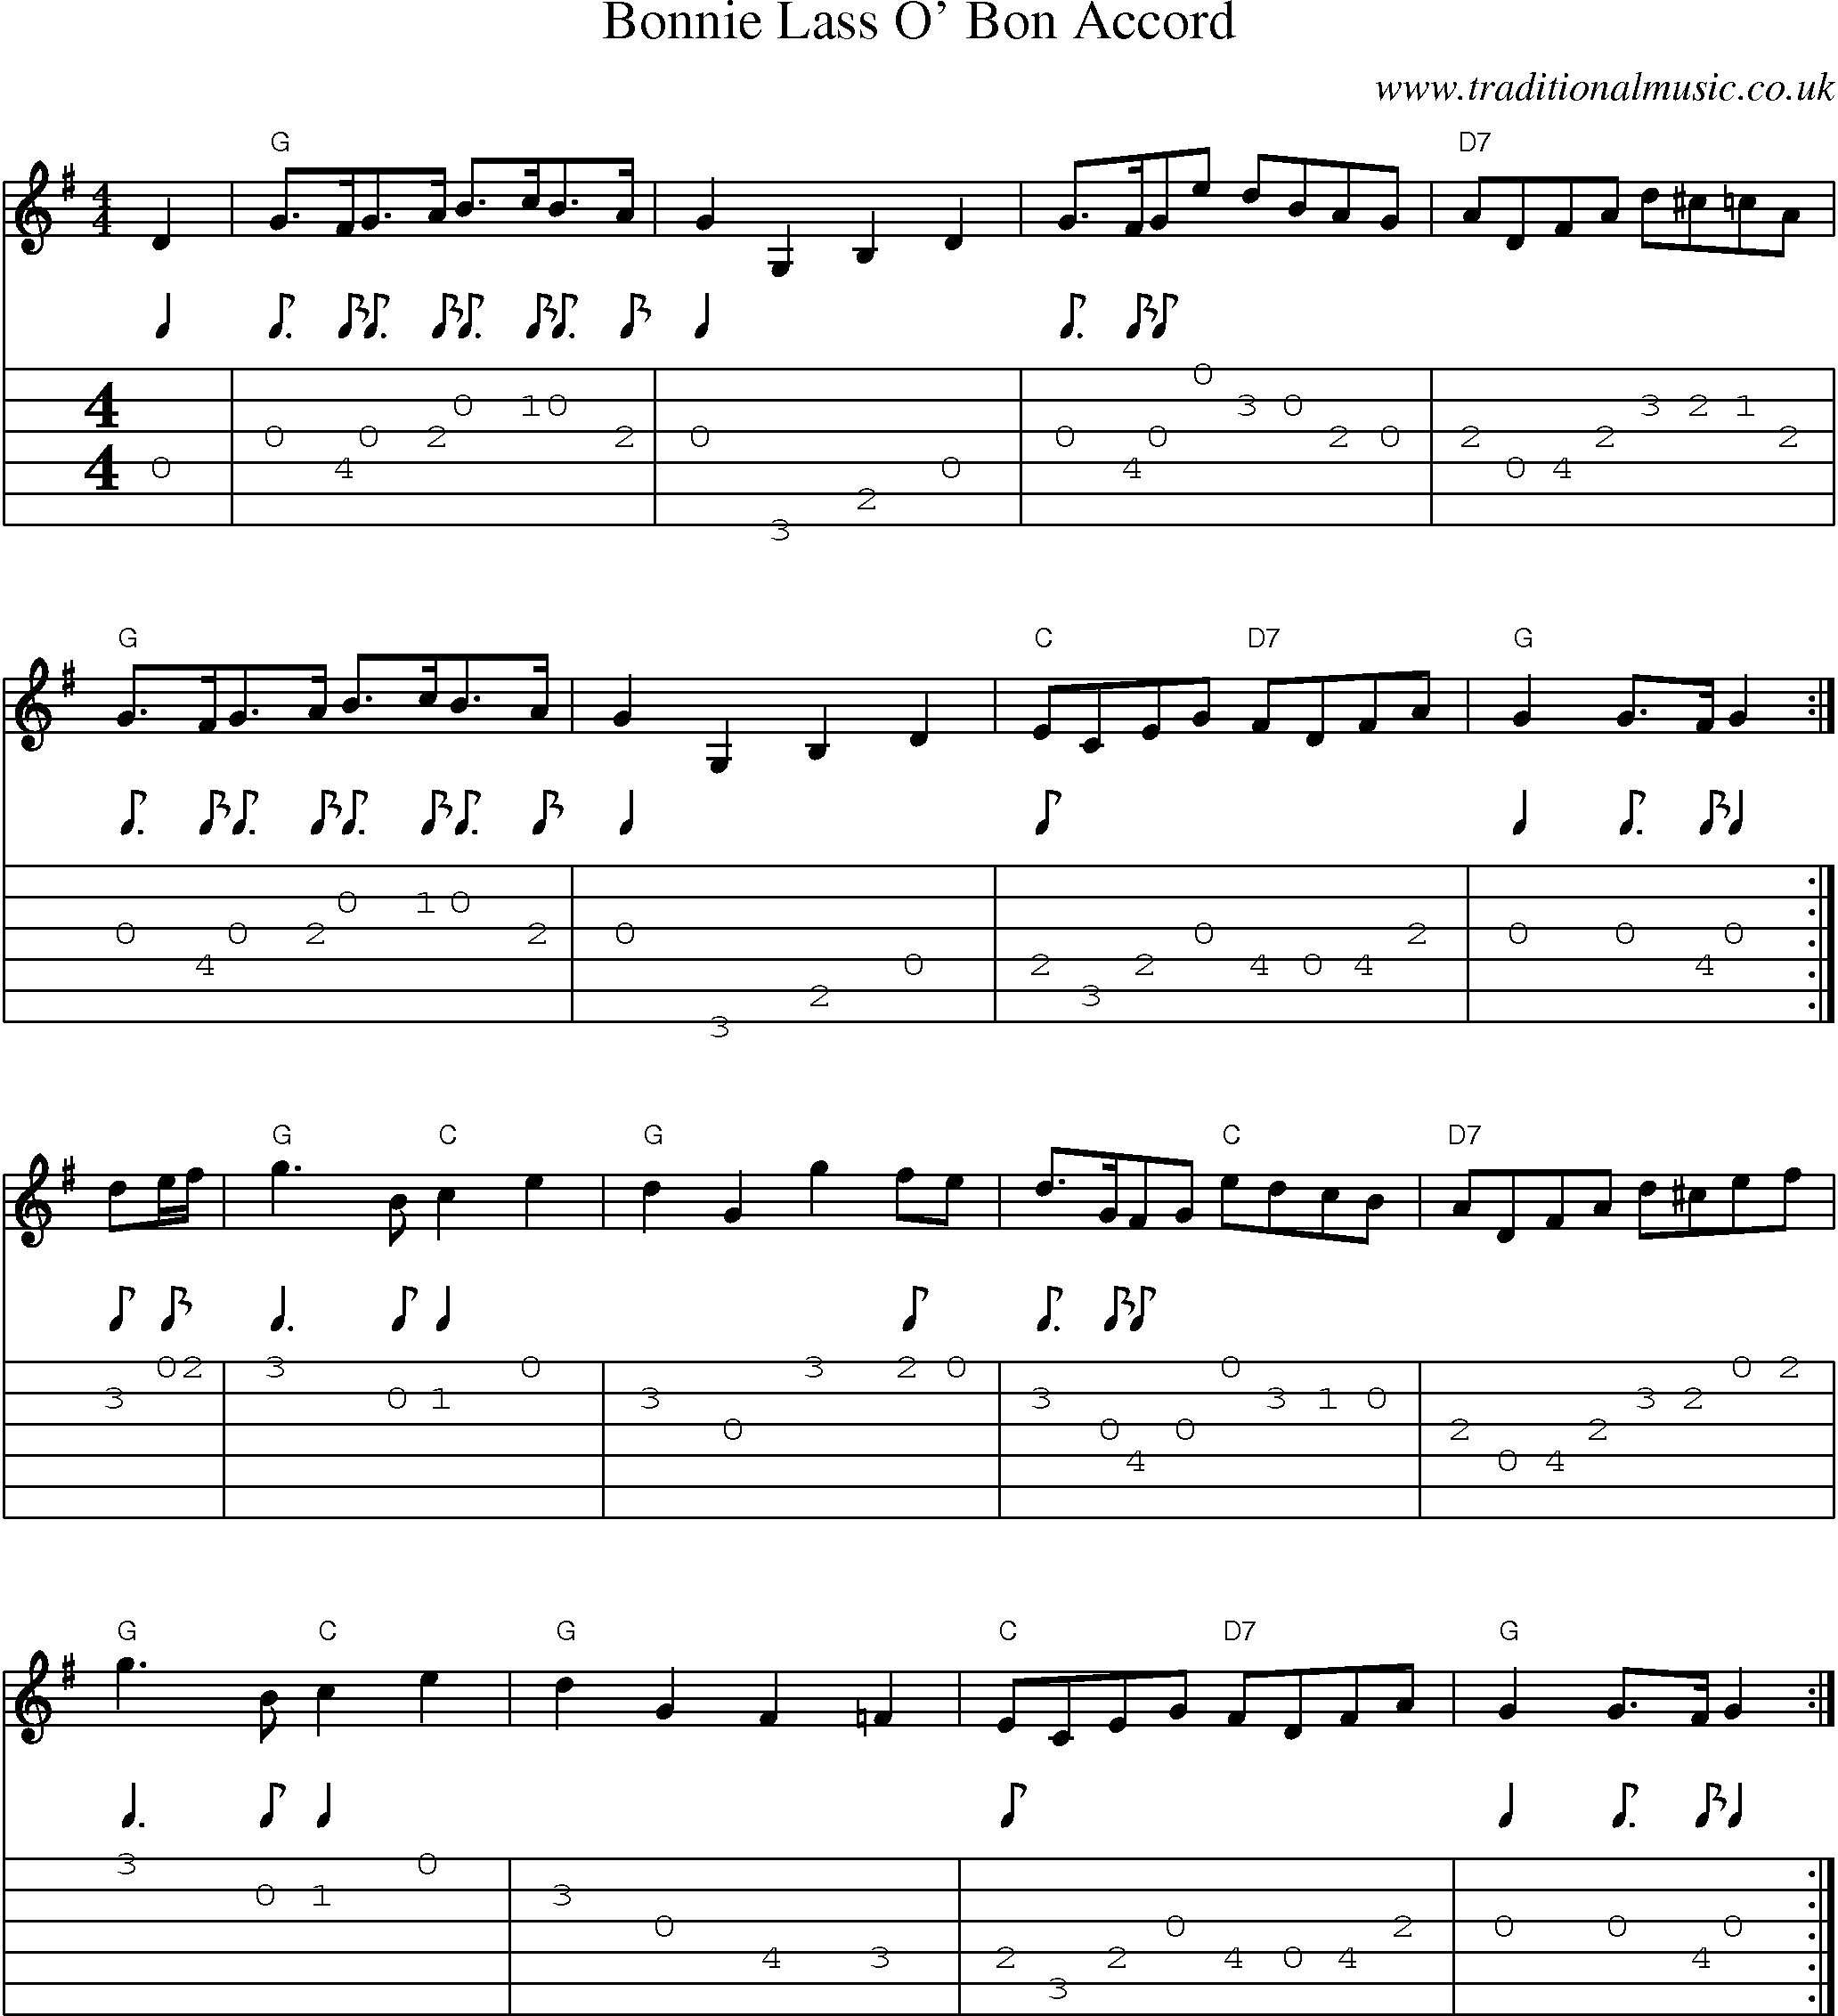 Music Score and Guitar Tabs for Bonnie Lass O Bon Accord